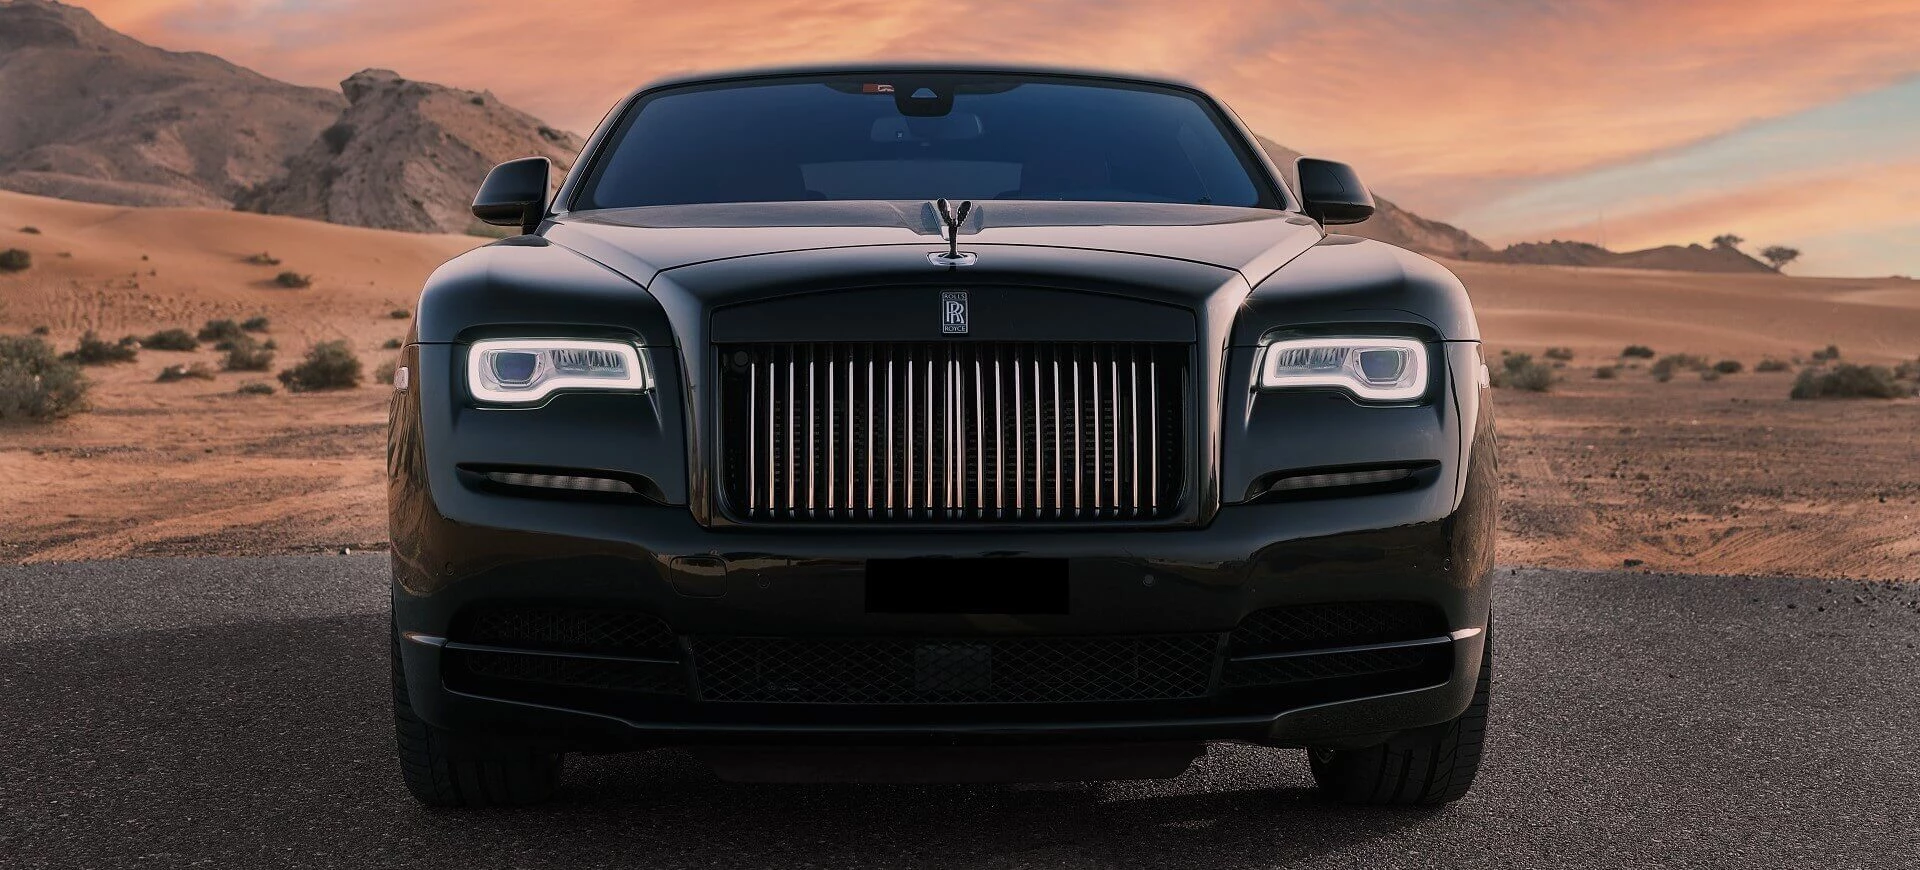 Rolls Royce Wraith Sort